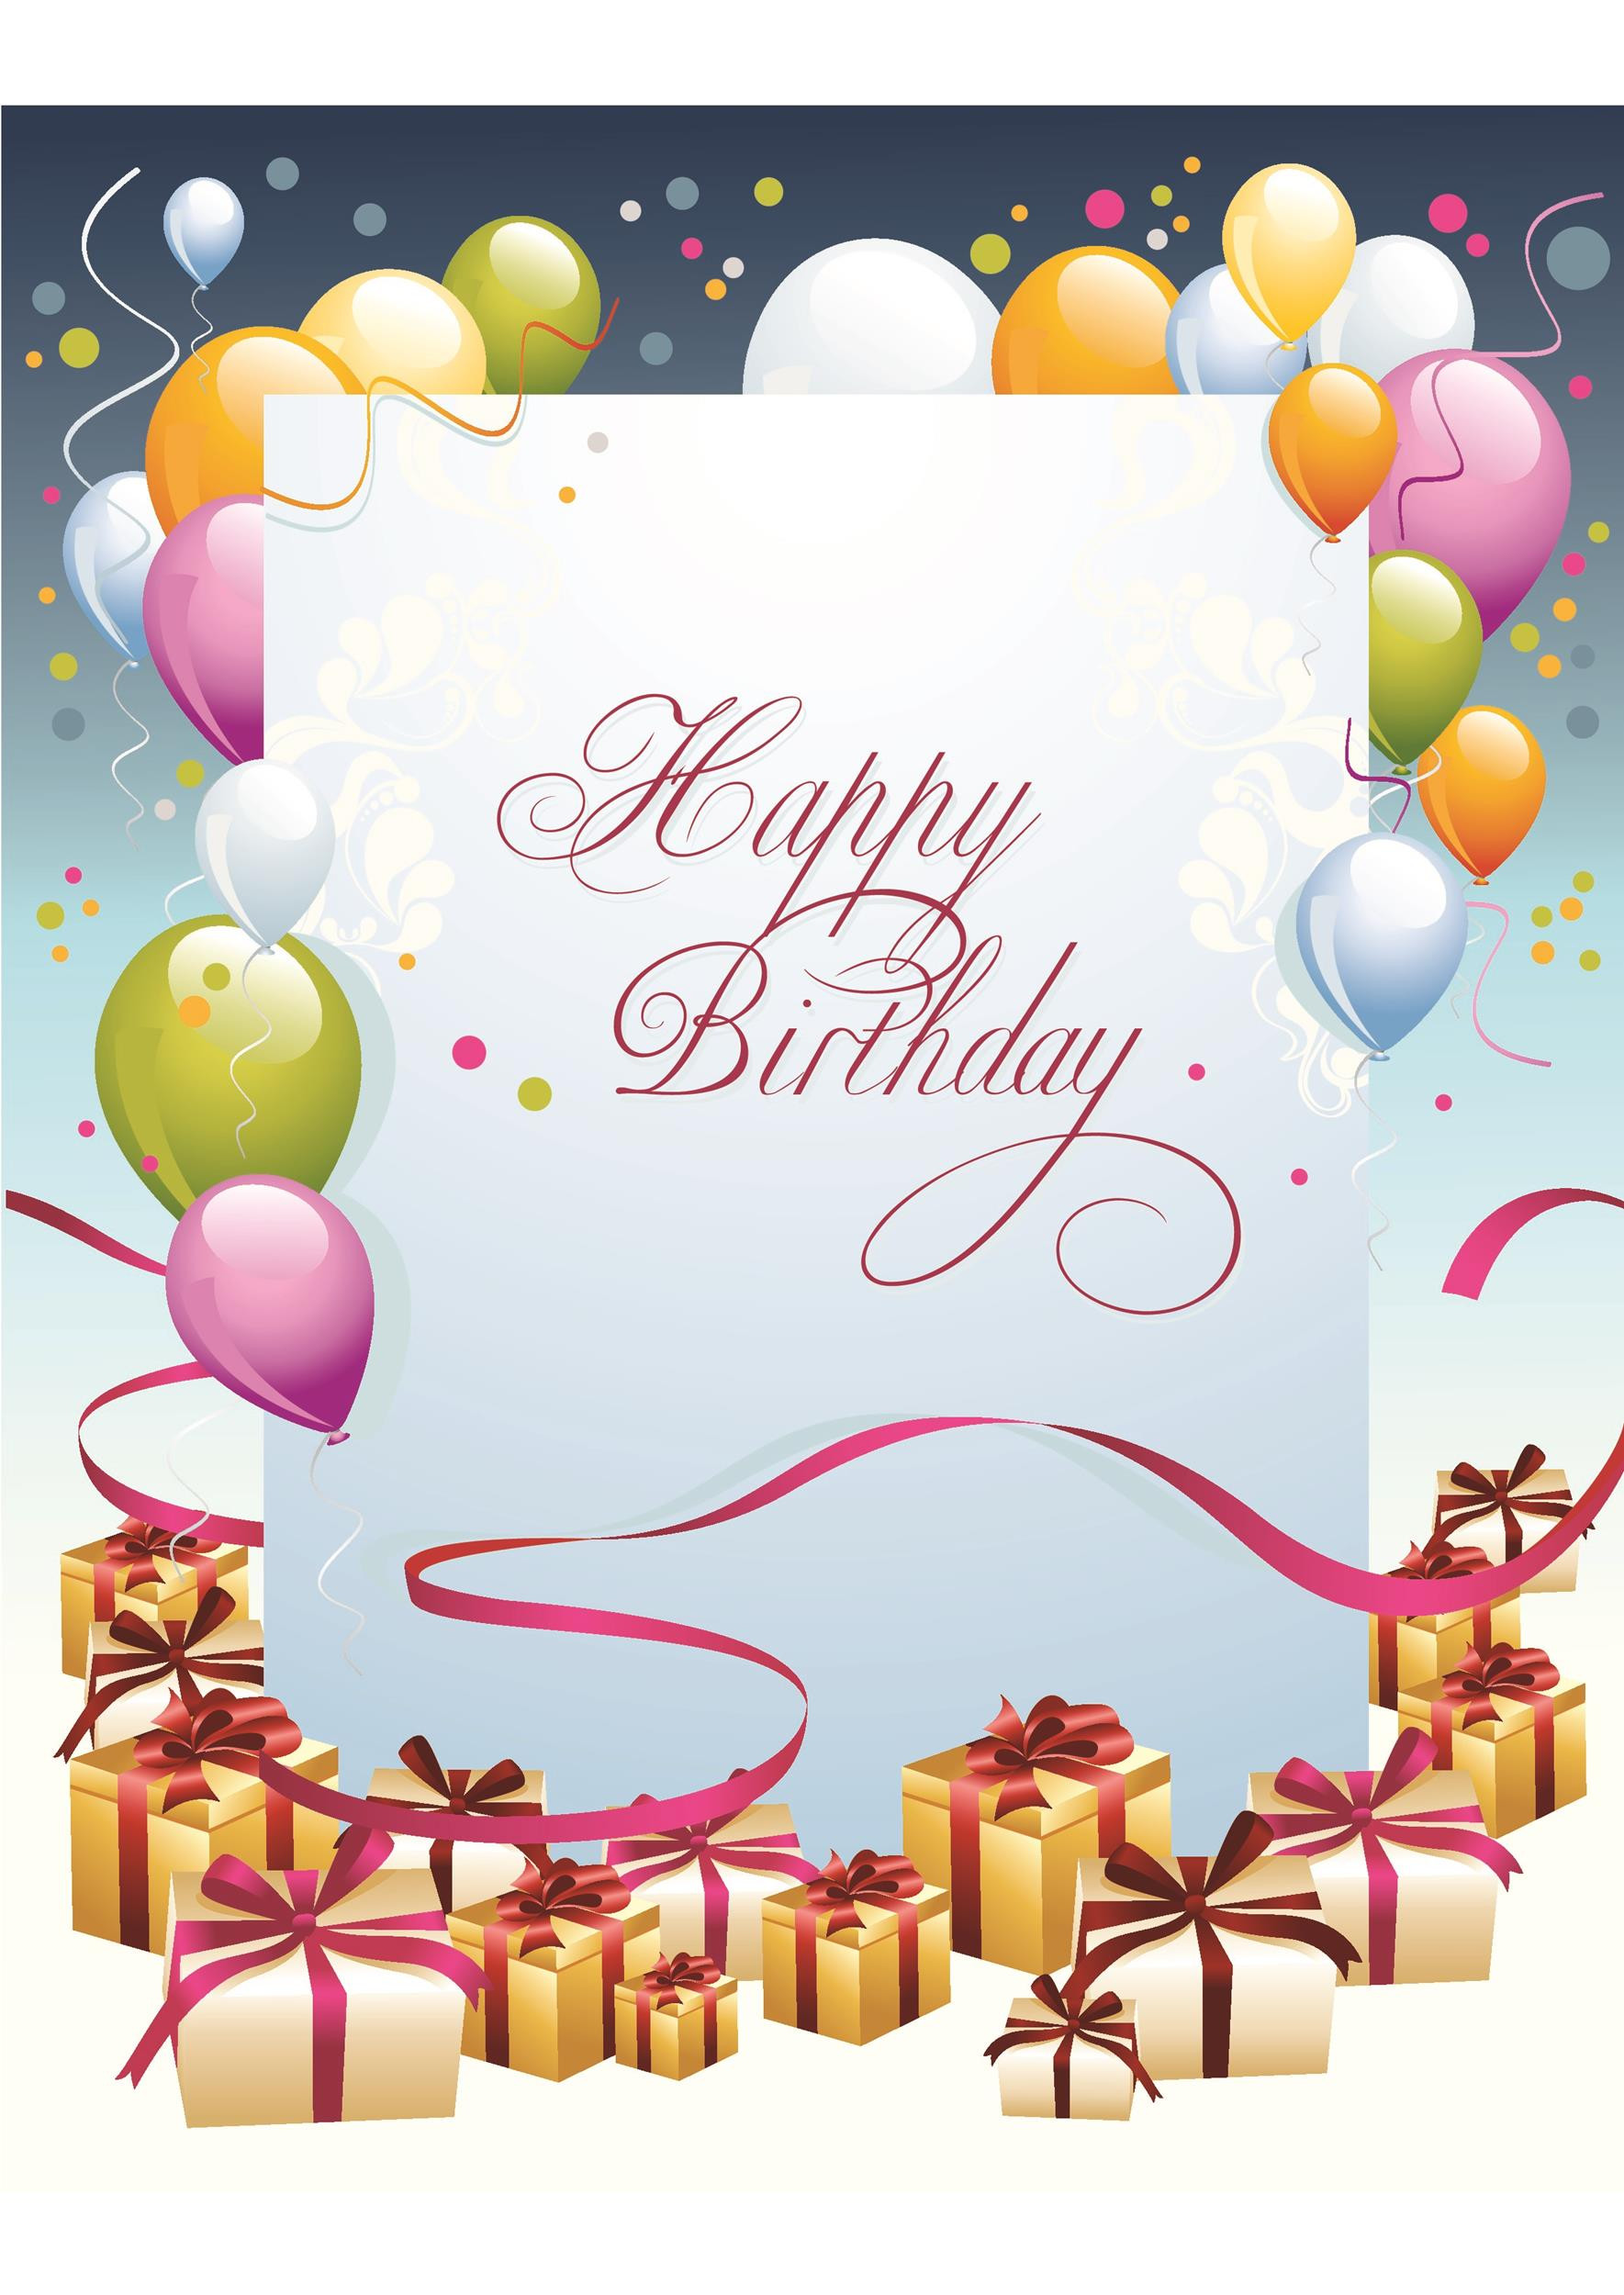 Printable Free Birthday Cards
 40 FREE Birthday Card Templates TemplateLab